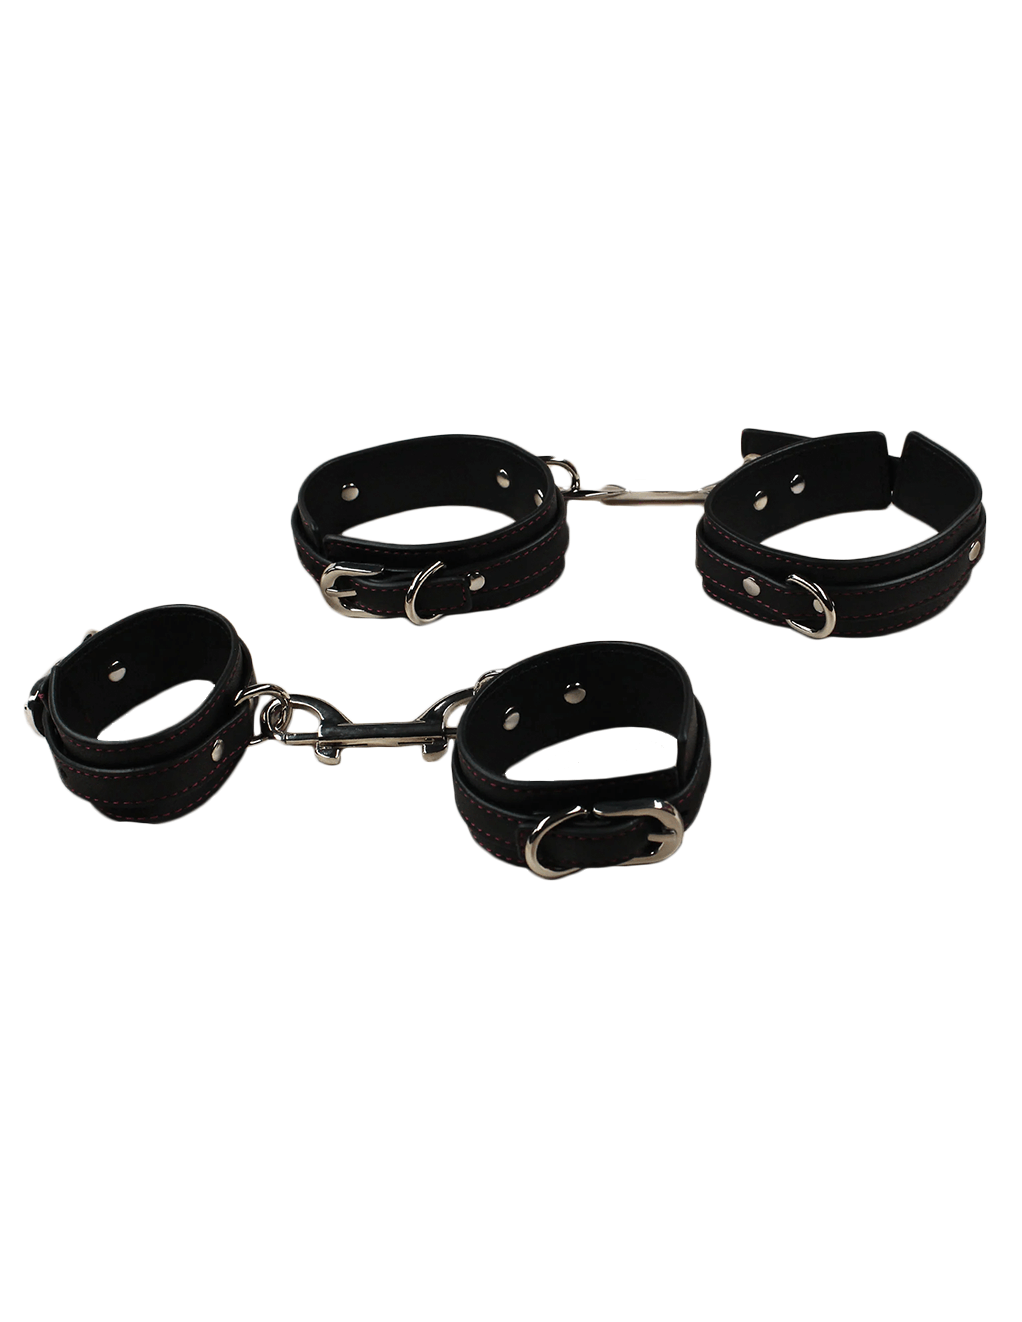 Edonista Isa Refined Restraint 9pc Bondage Set - Handcuffs, Ankle Cuffs and Restraint Hooks